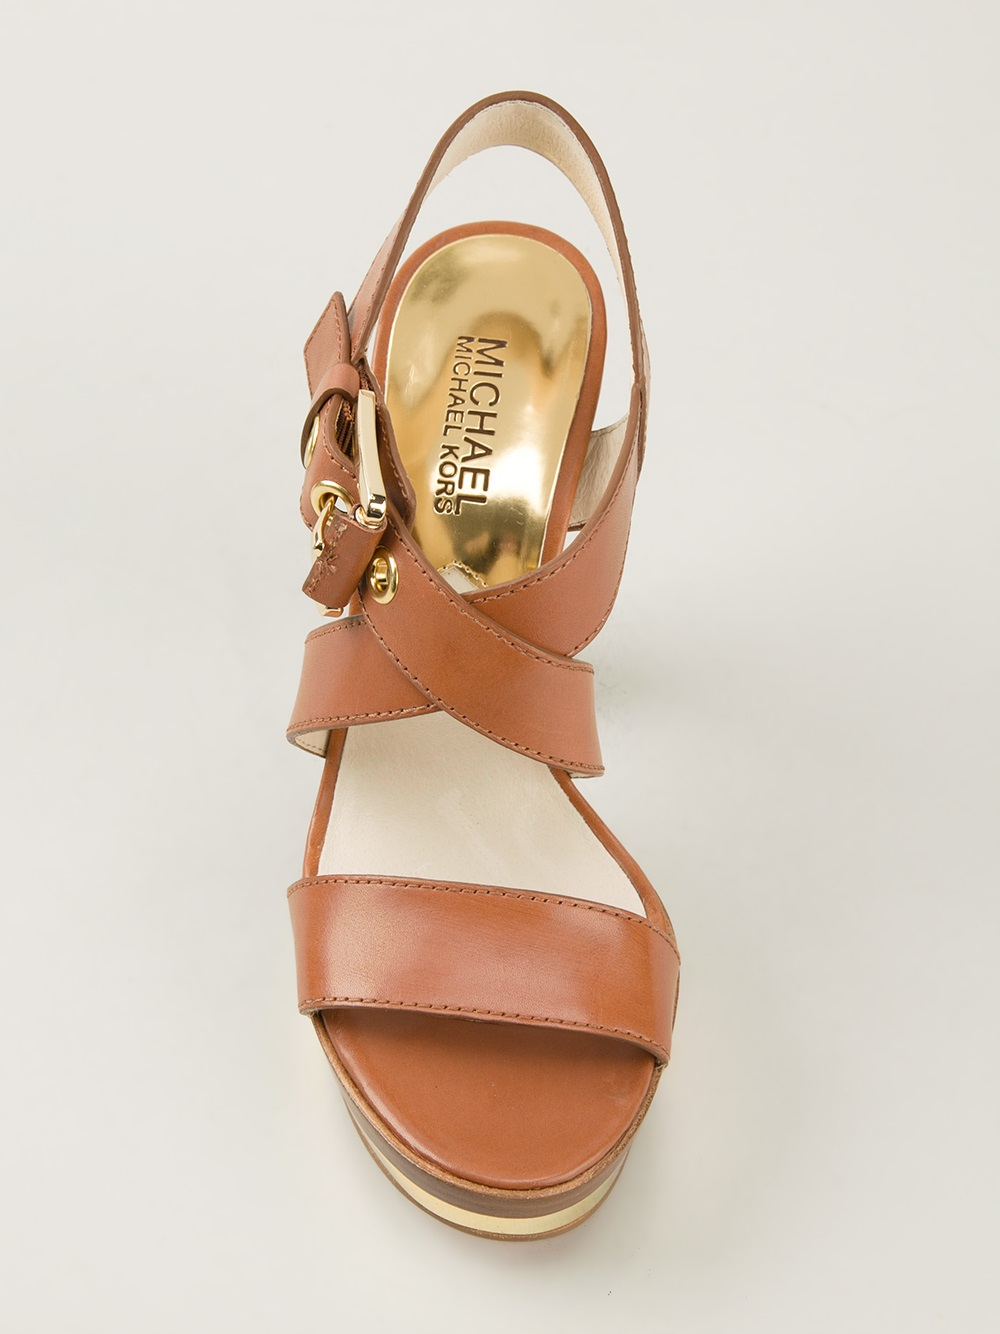 MICHAEL Michael Kors Calder Platform Sandals in Brown - Lyst